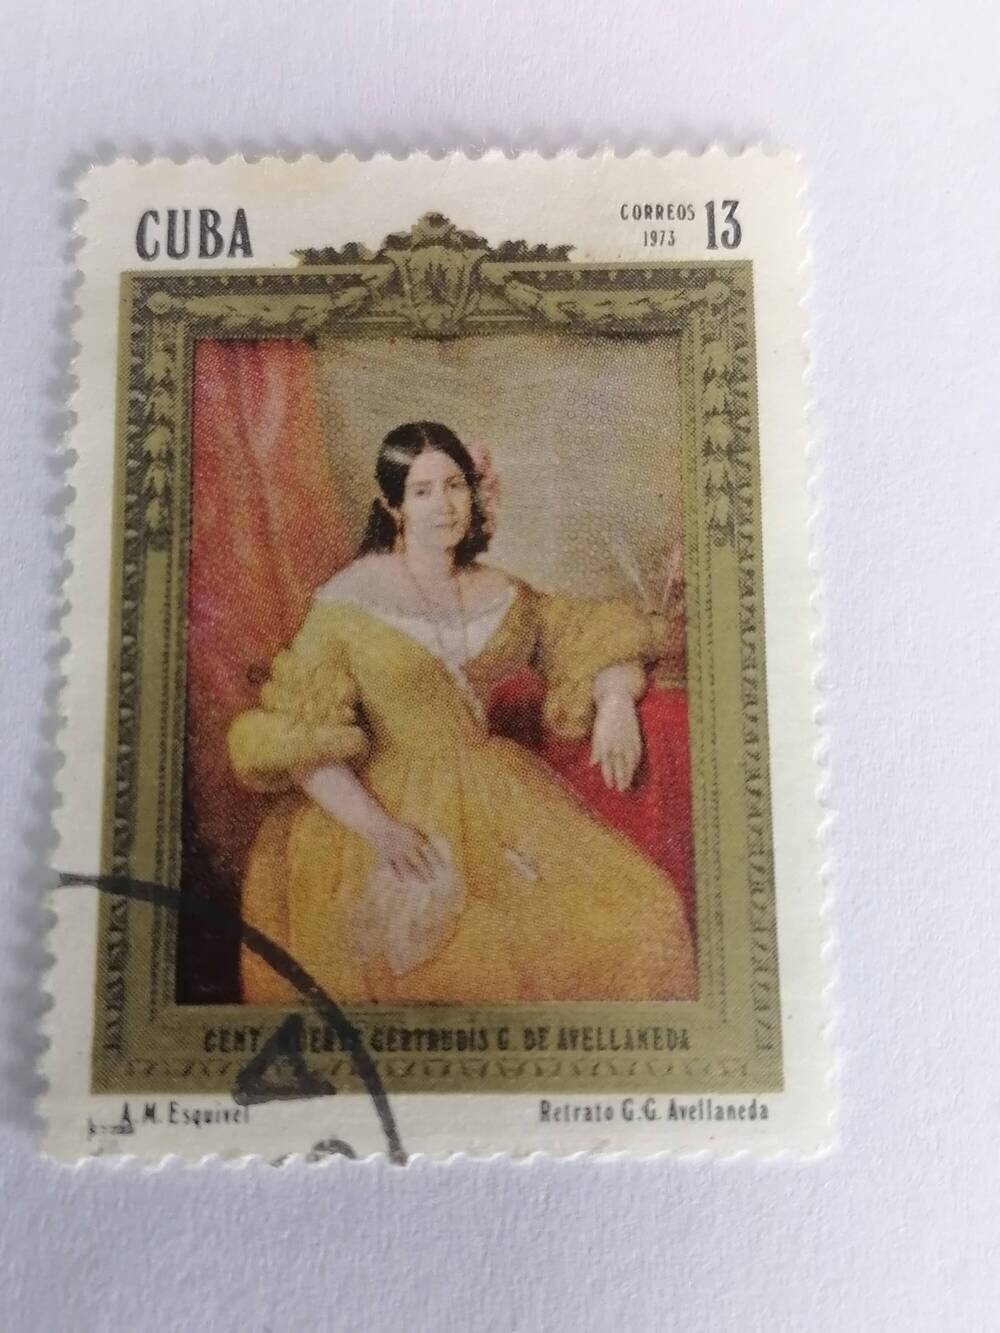 Марка почтовая гашеная, Cuba Correos,Куба,1973 г Retrato GG Avellneda A.M.Esquivel